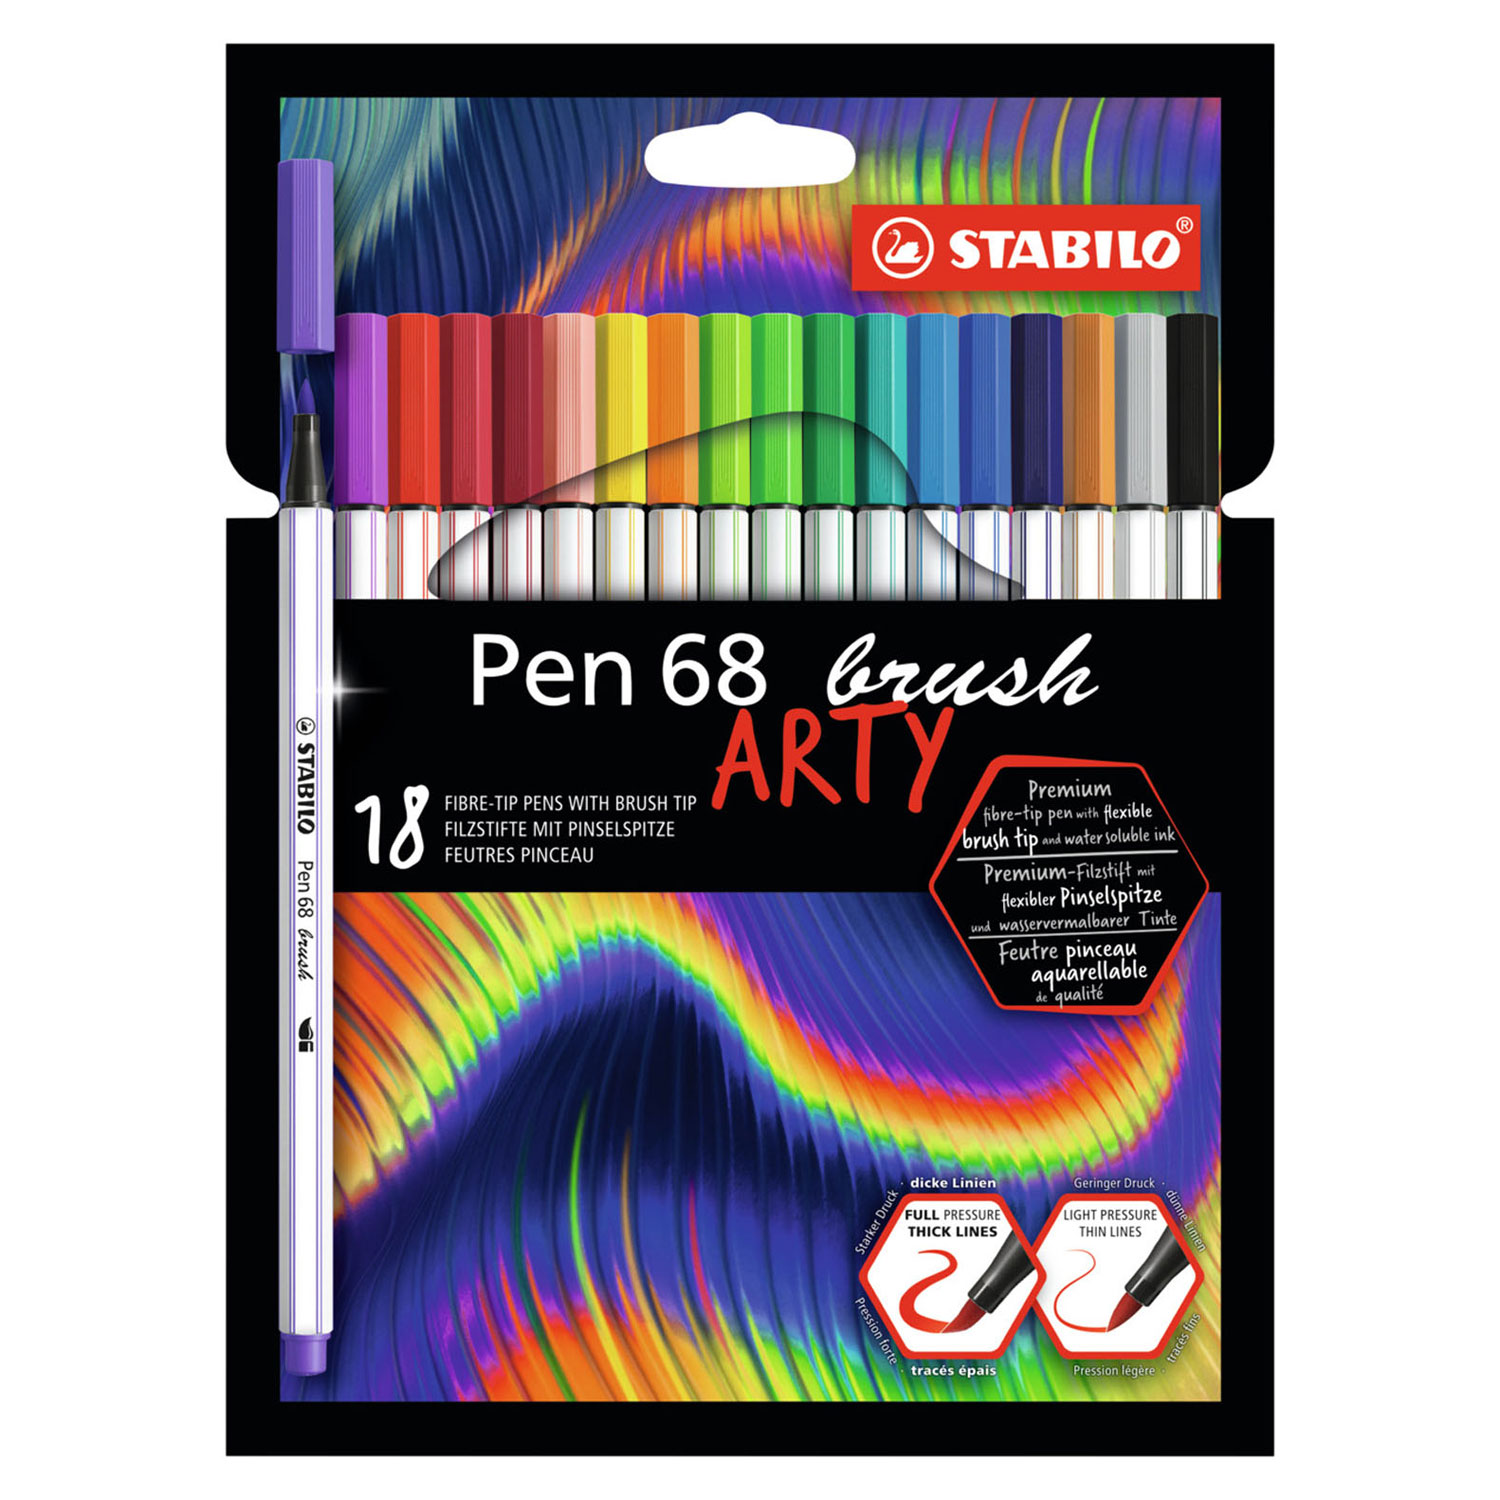 STABILO Pen 68 Brush ARTY Viltstiften